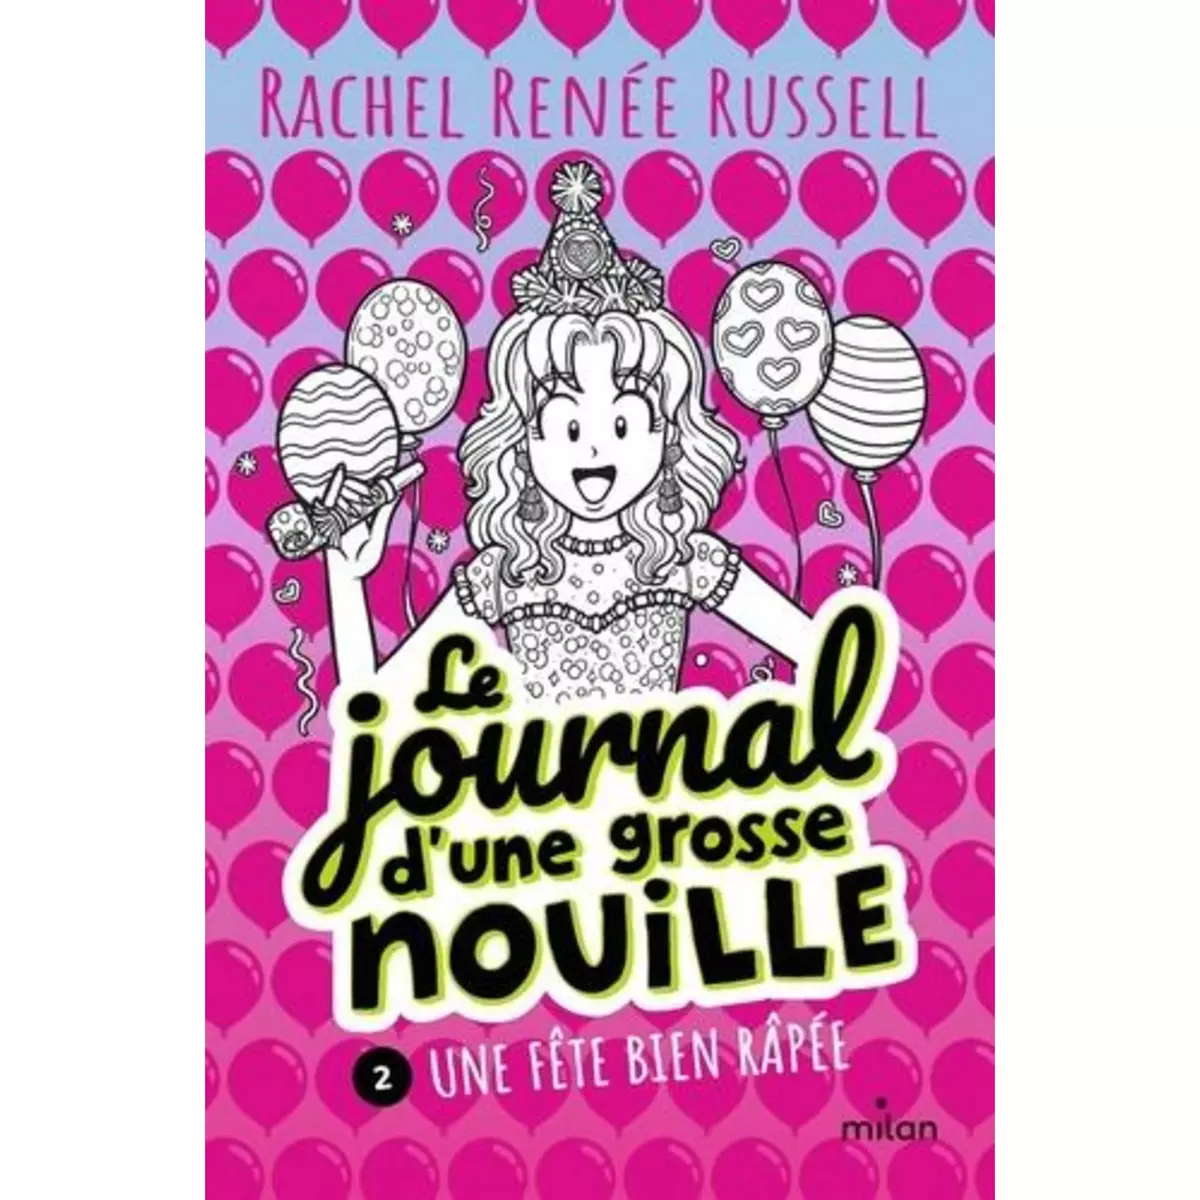  LE JOURNAL D'UNE GROSSE NOUILLE TOME 2 : UNE FETE BIEN RAPEE, Russell Rachel Renée